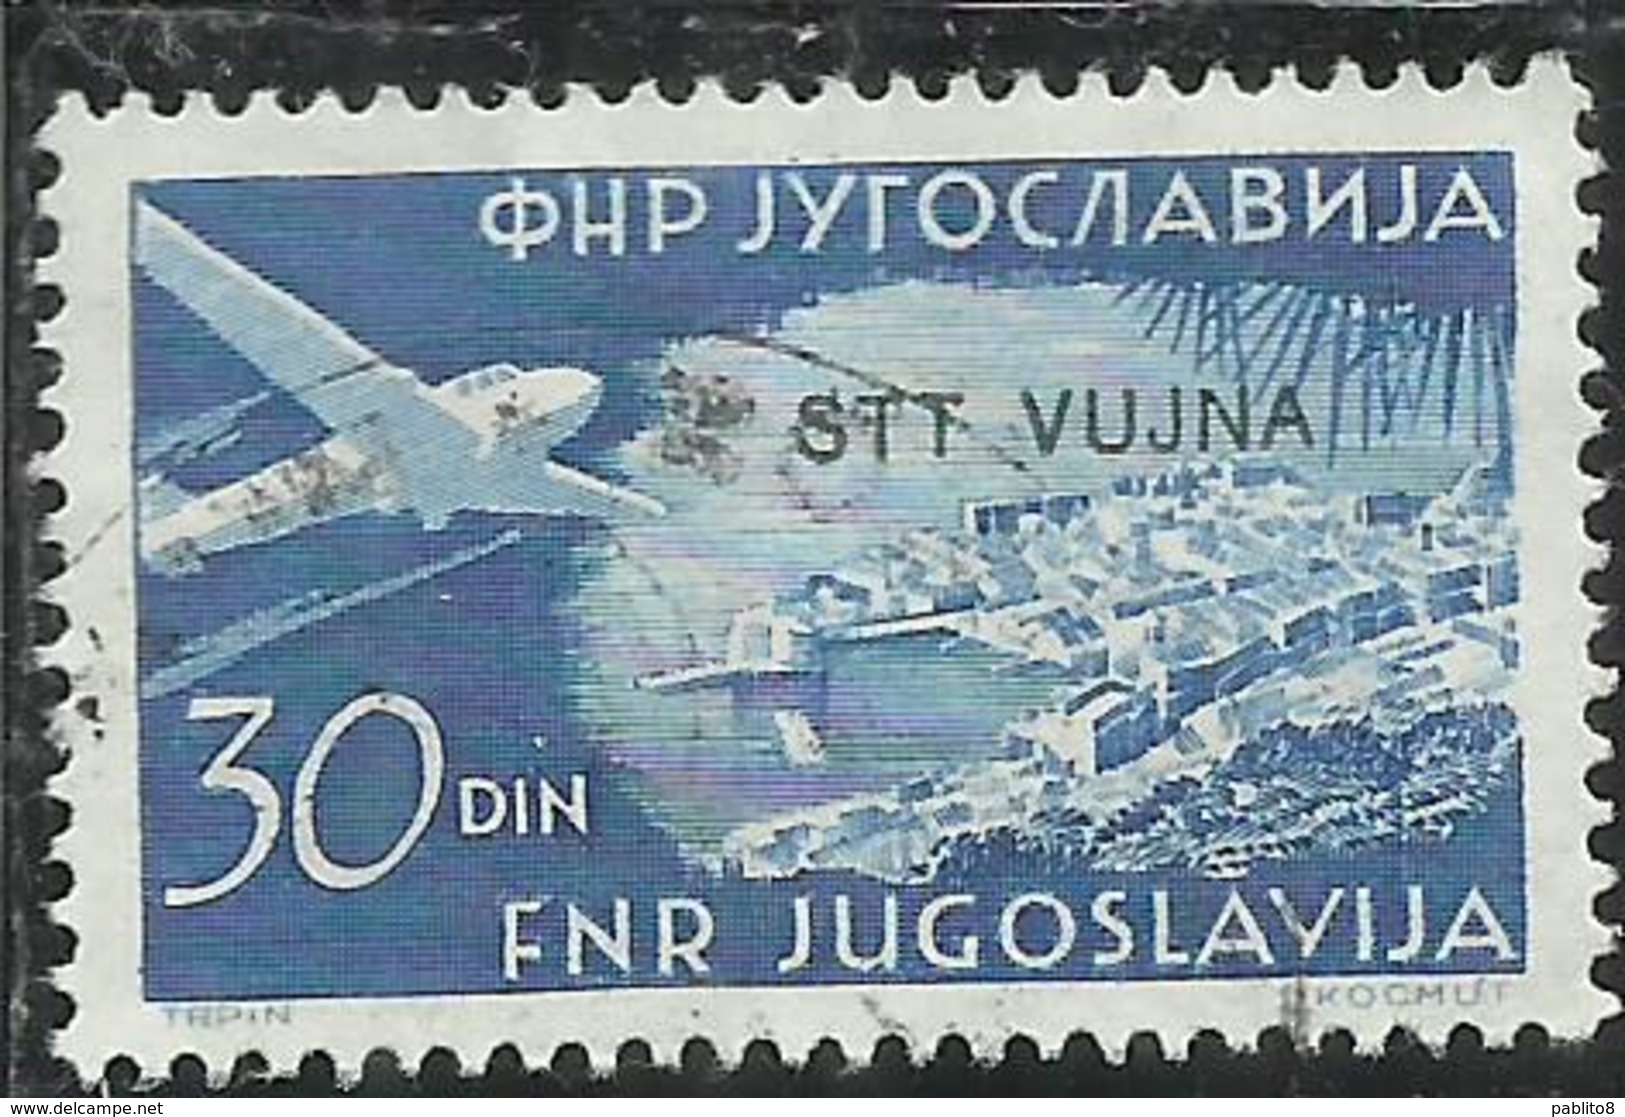 TRIESTE B 1954 POSTA AEREA AIR MAIL ESPERANTO CONGRESS YUGOSLAVIA SOPRASTAMPATO JUGOSLAVIA 30d USATO USED OBLITERE' - Airmail